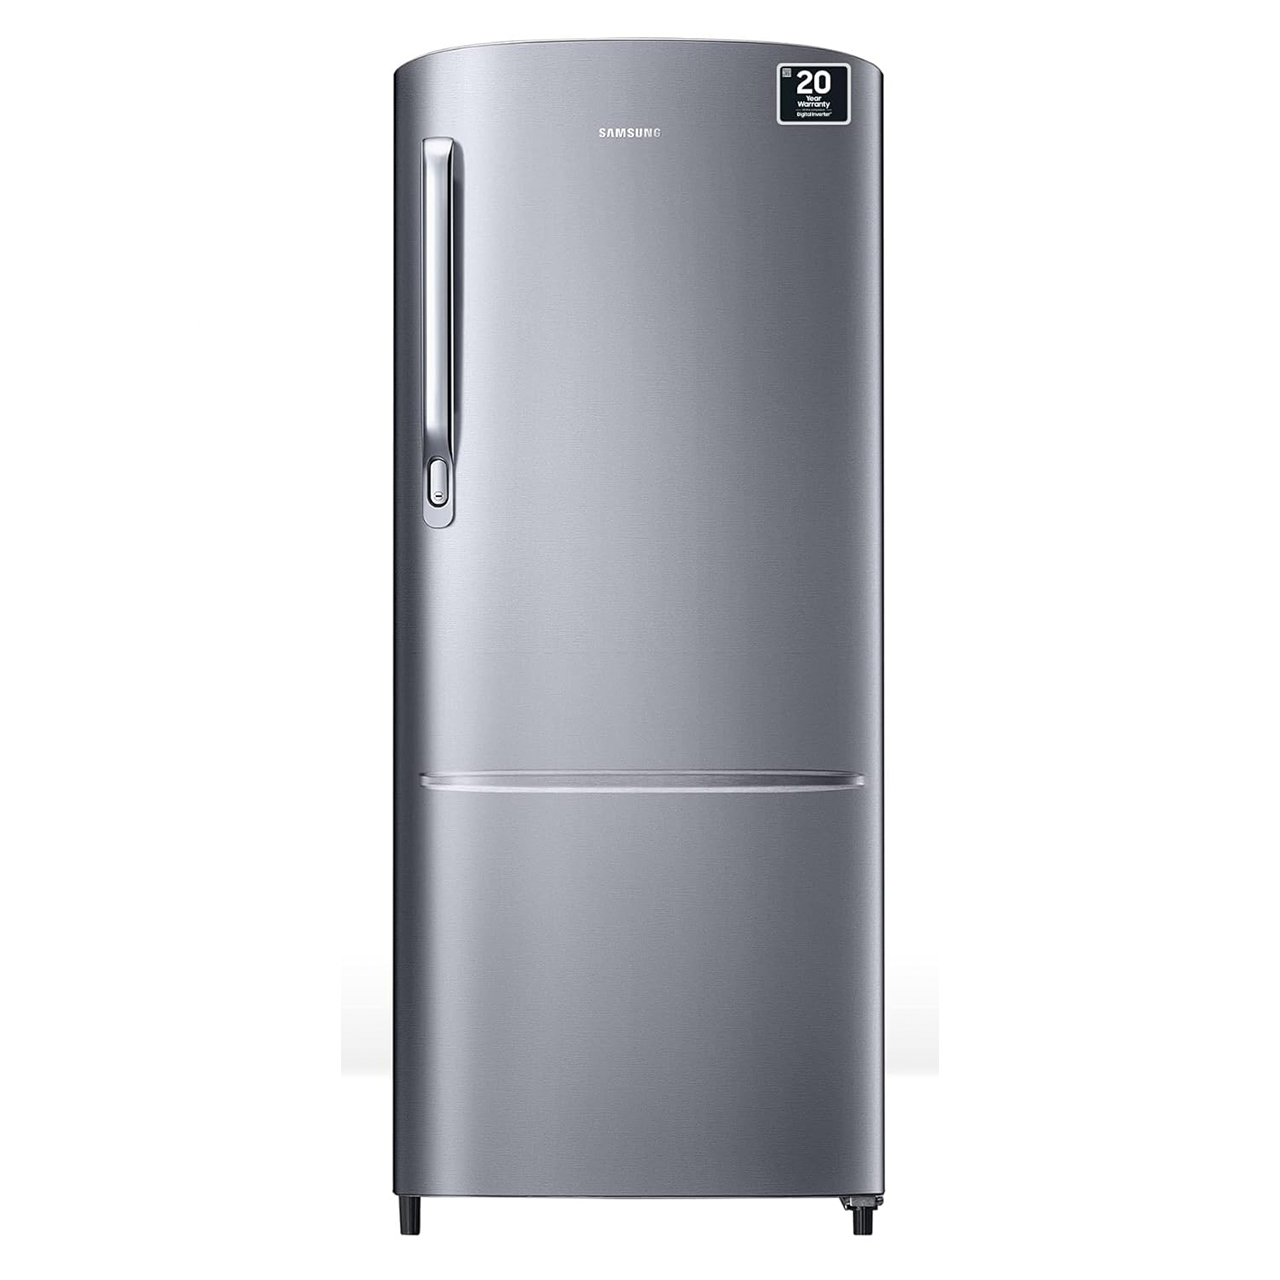 Samsung 183 L, Digital Inverter, Direct-Cool Single Door Refrigerator